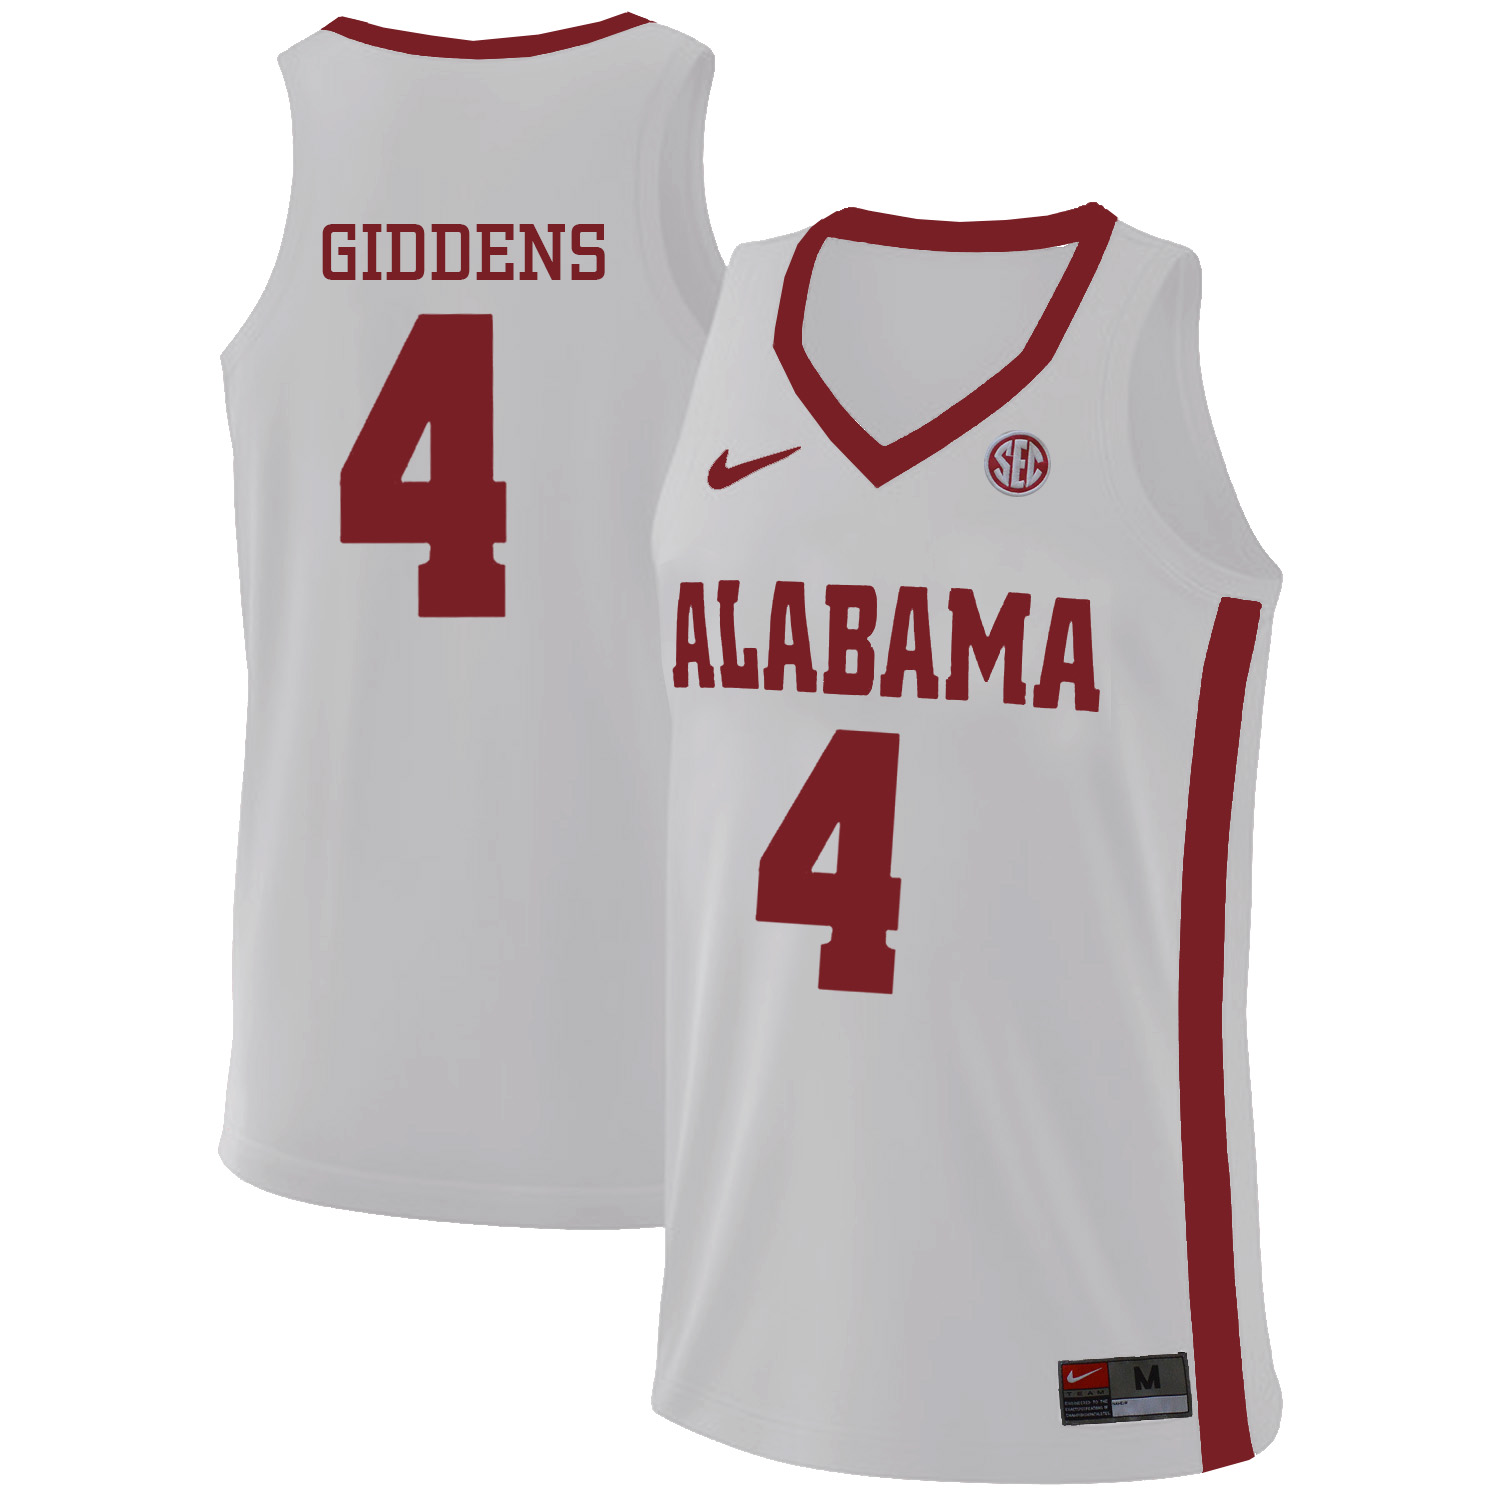 Alabama Crimson Tide 4 Daniel Giddens White College Basketball Jersey